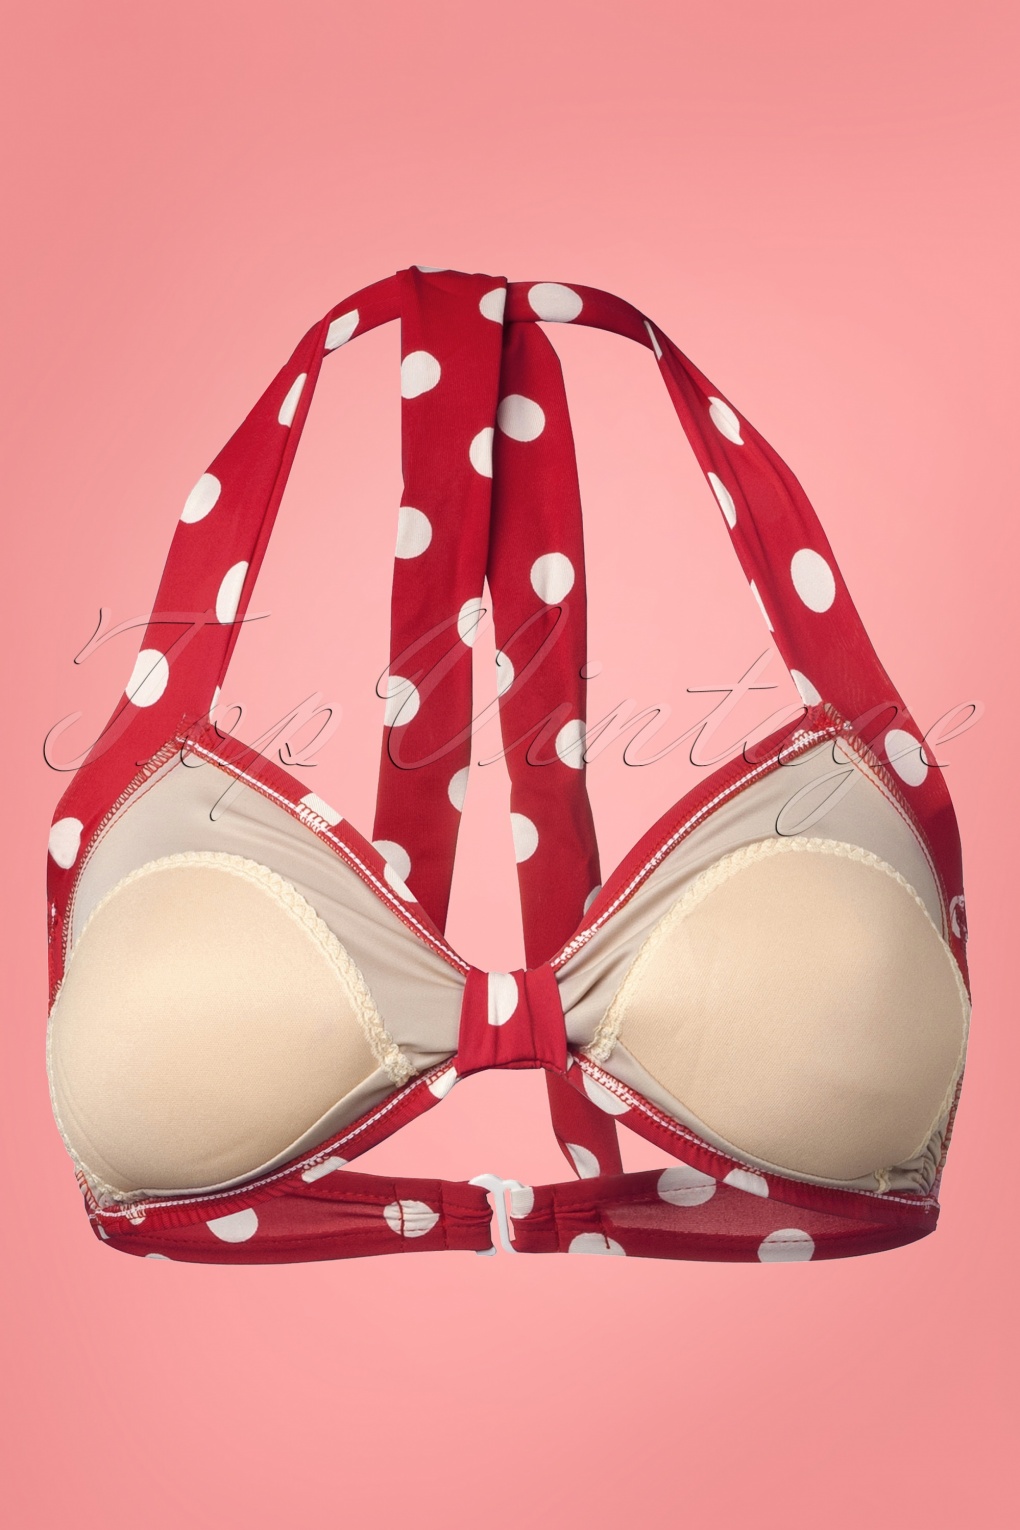 Meerdere Toezicht houden fundament 50s Classic Polka Bikini Top in Red and White